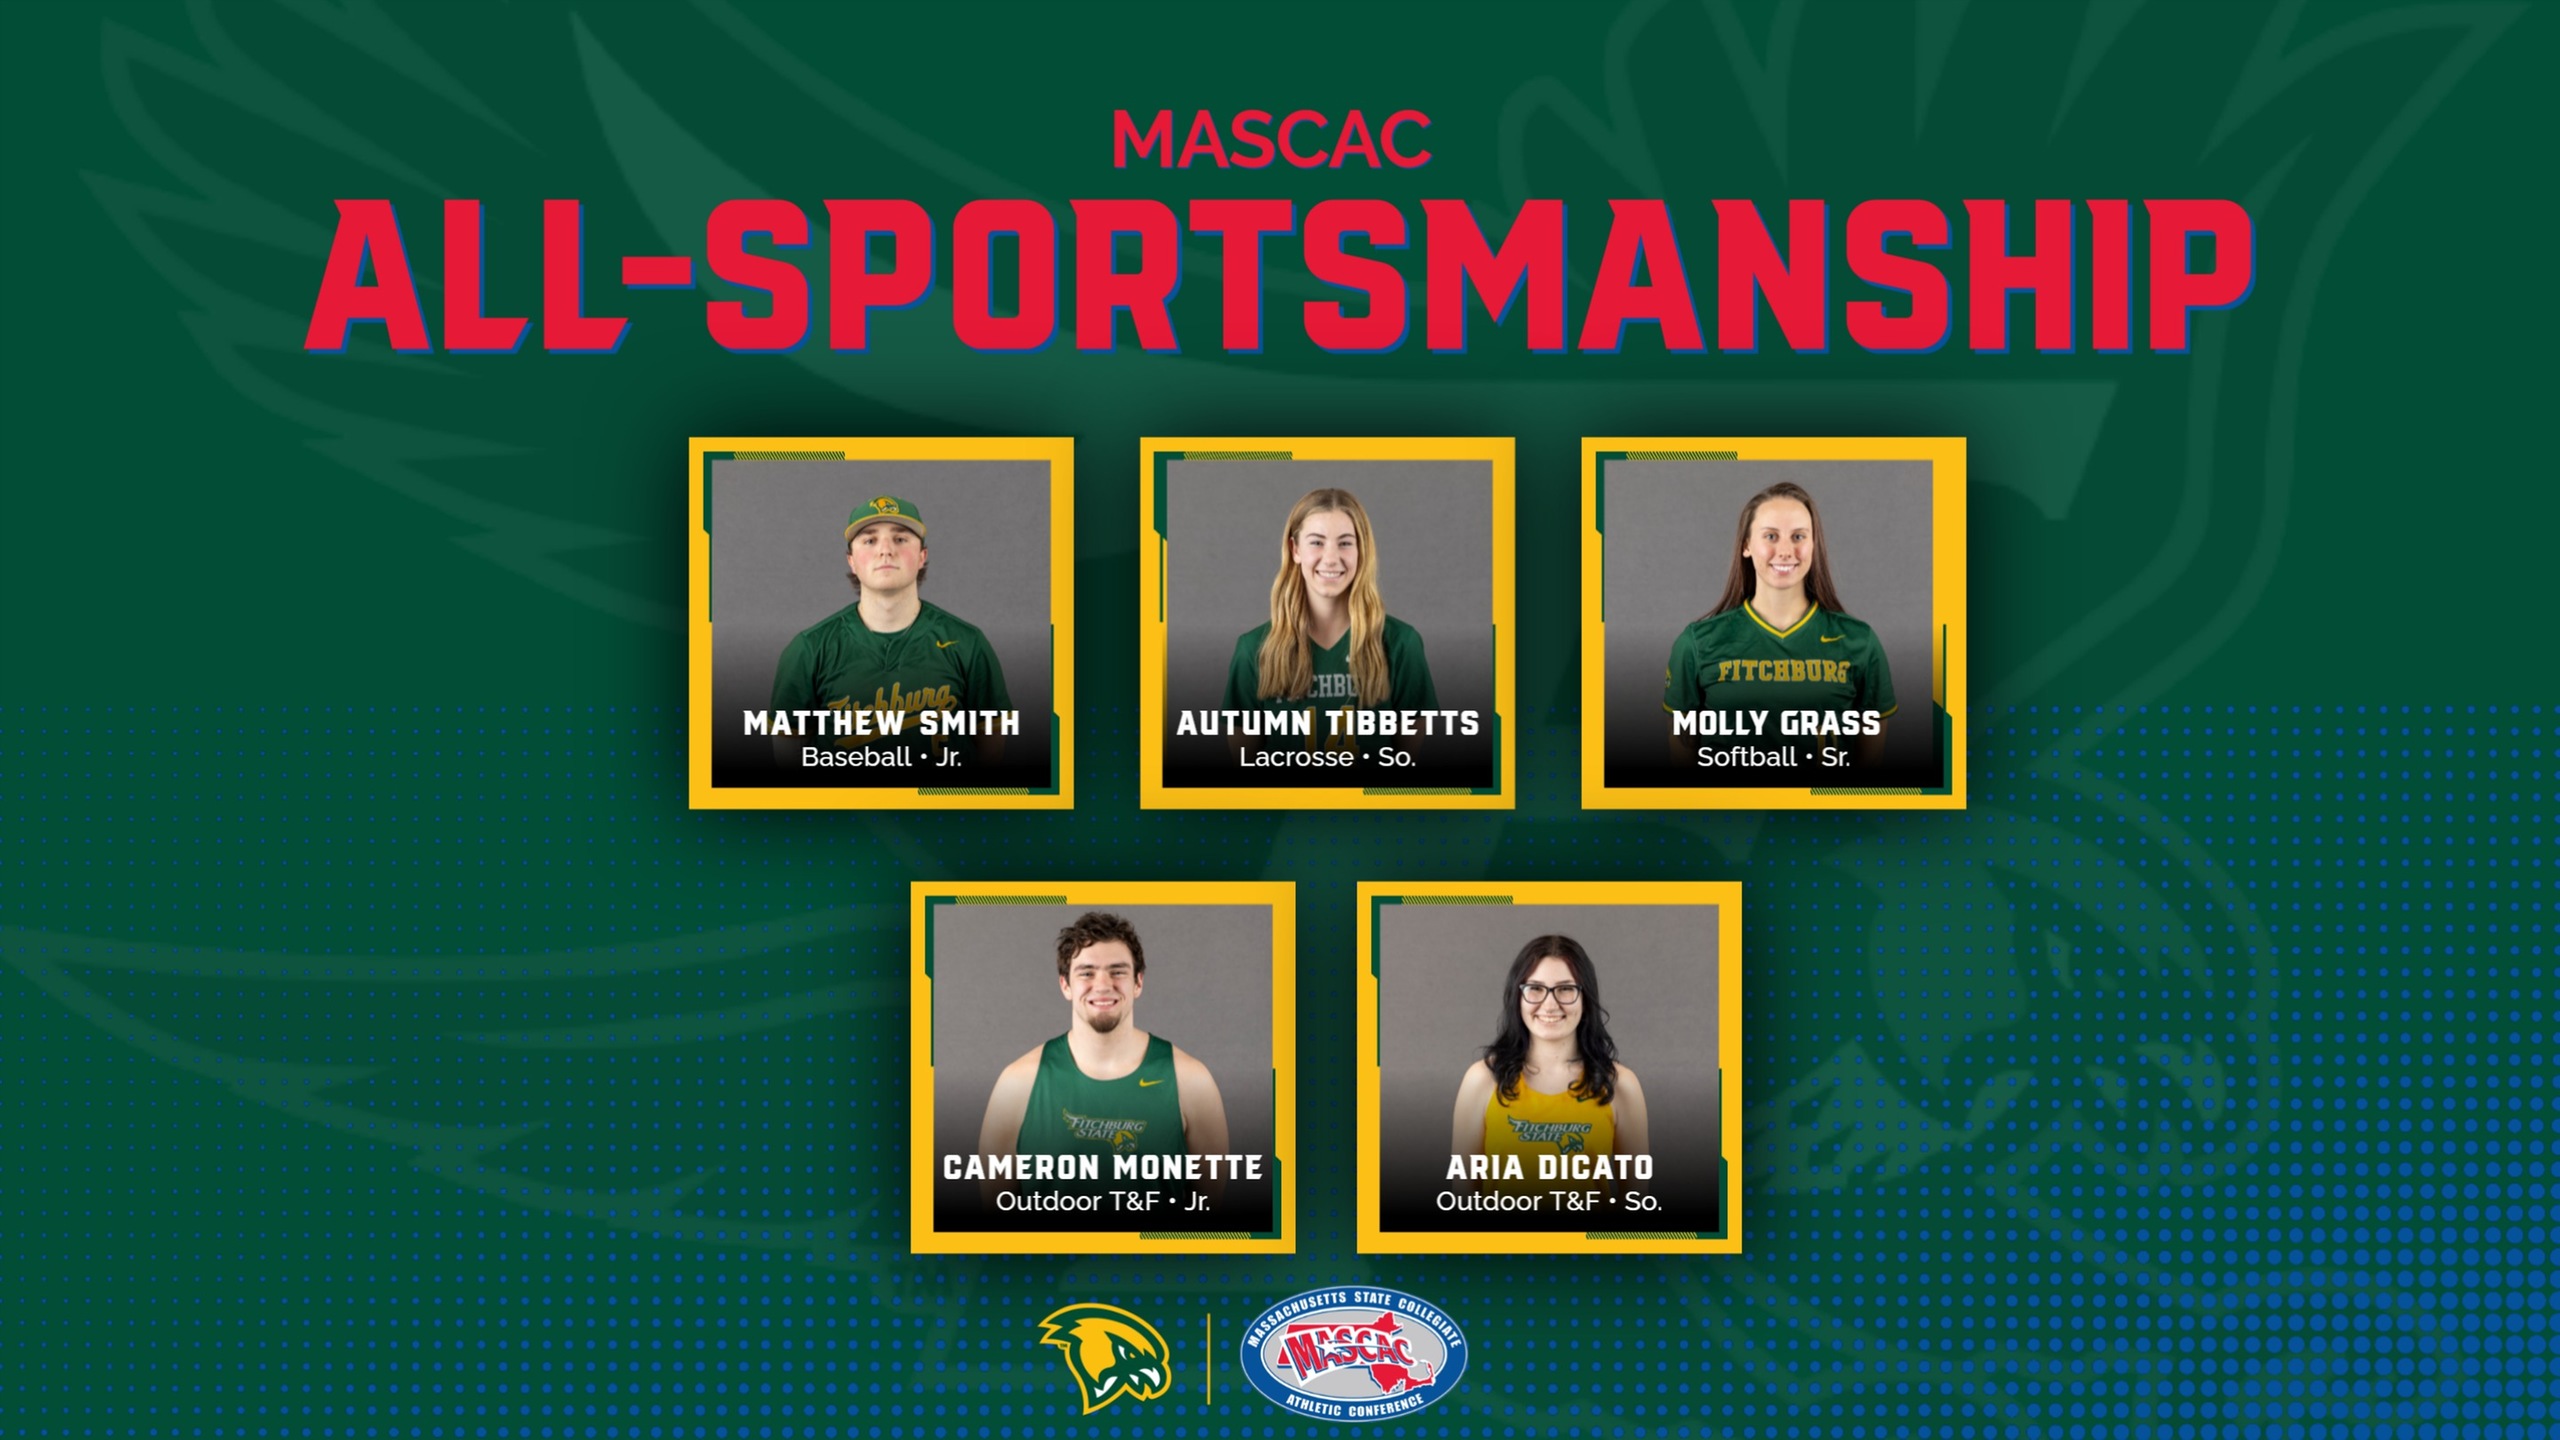 MASCAC Spring Sportsmanship Team Announced